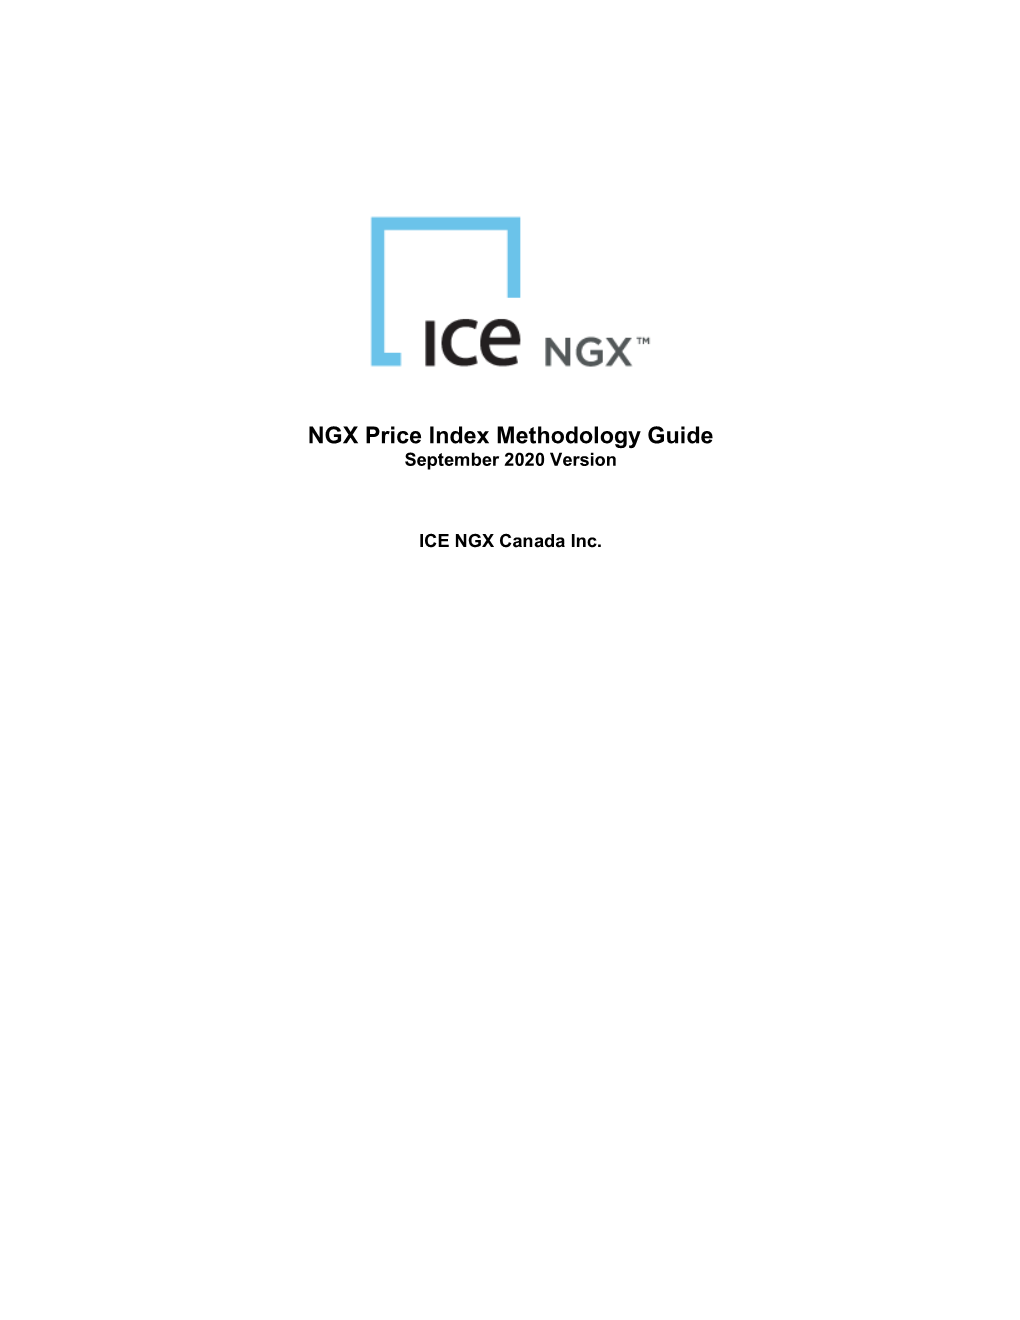 NGX Price Index Methodology Guide September 2020 Version